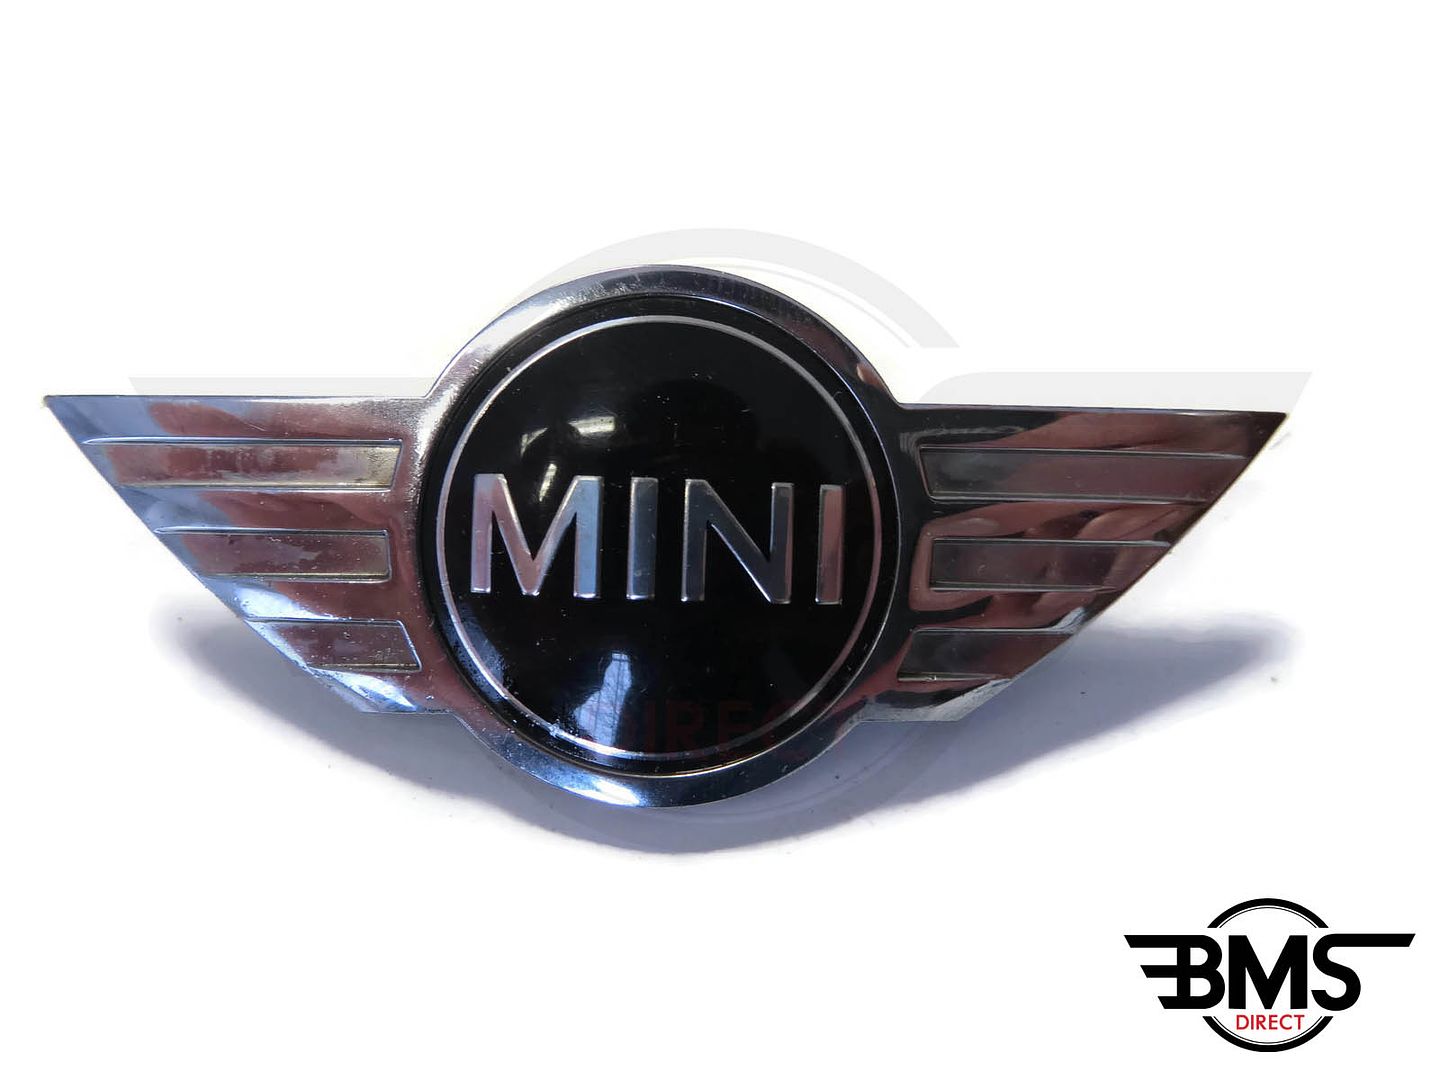 Bmw mini cooper s badge #6